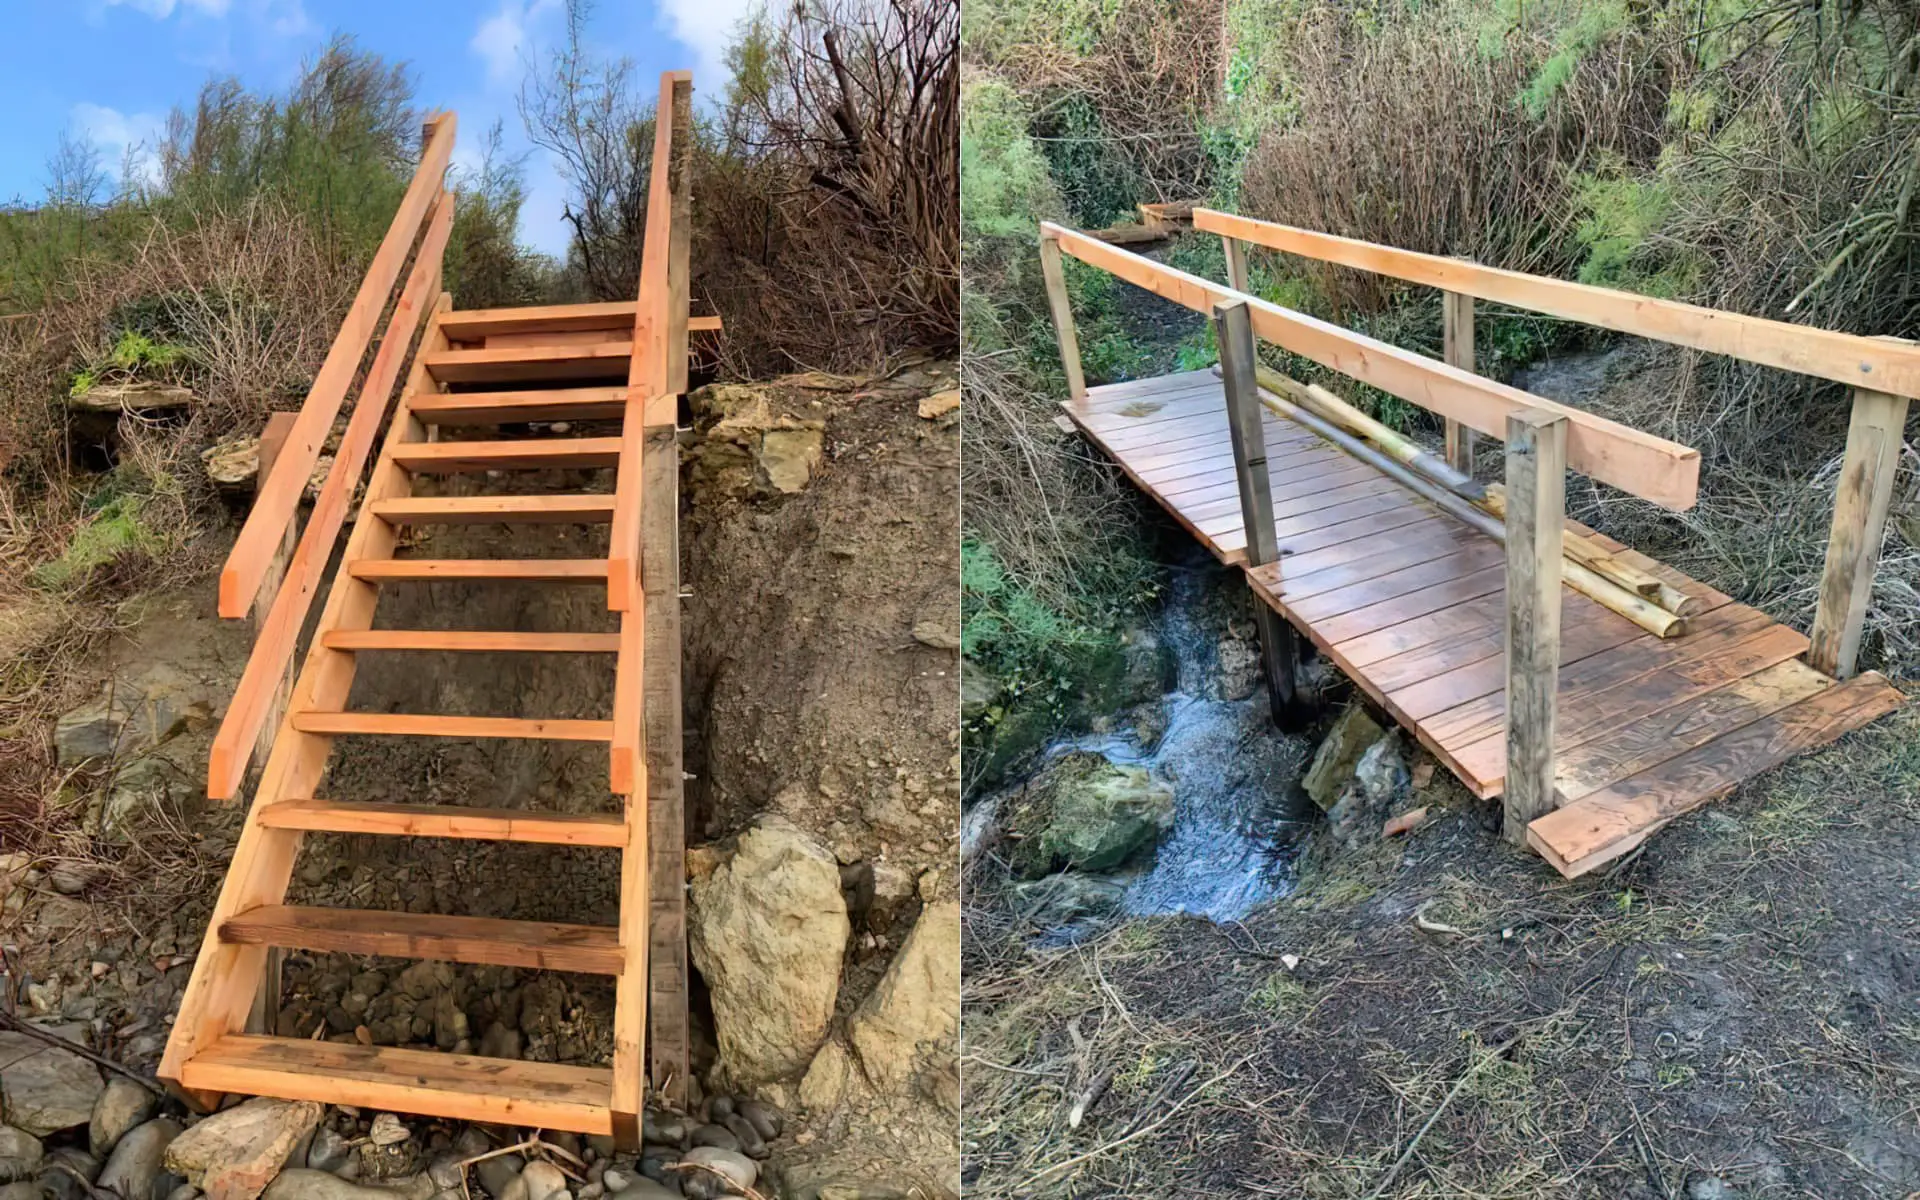 New steps and footbridge to Binnel Bay beach